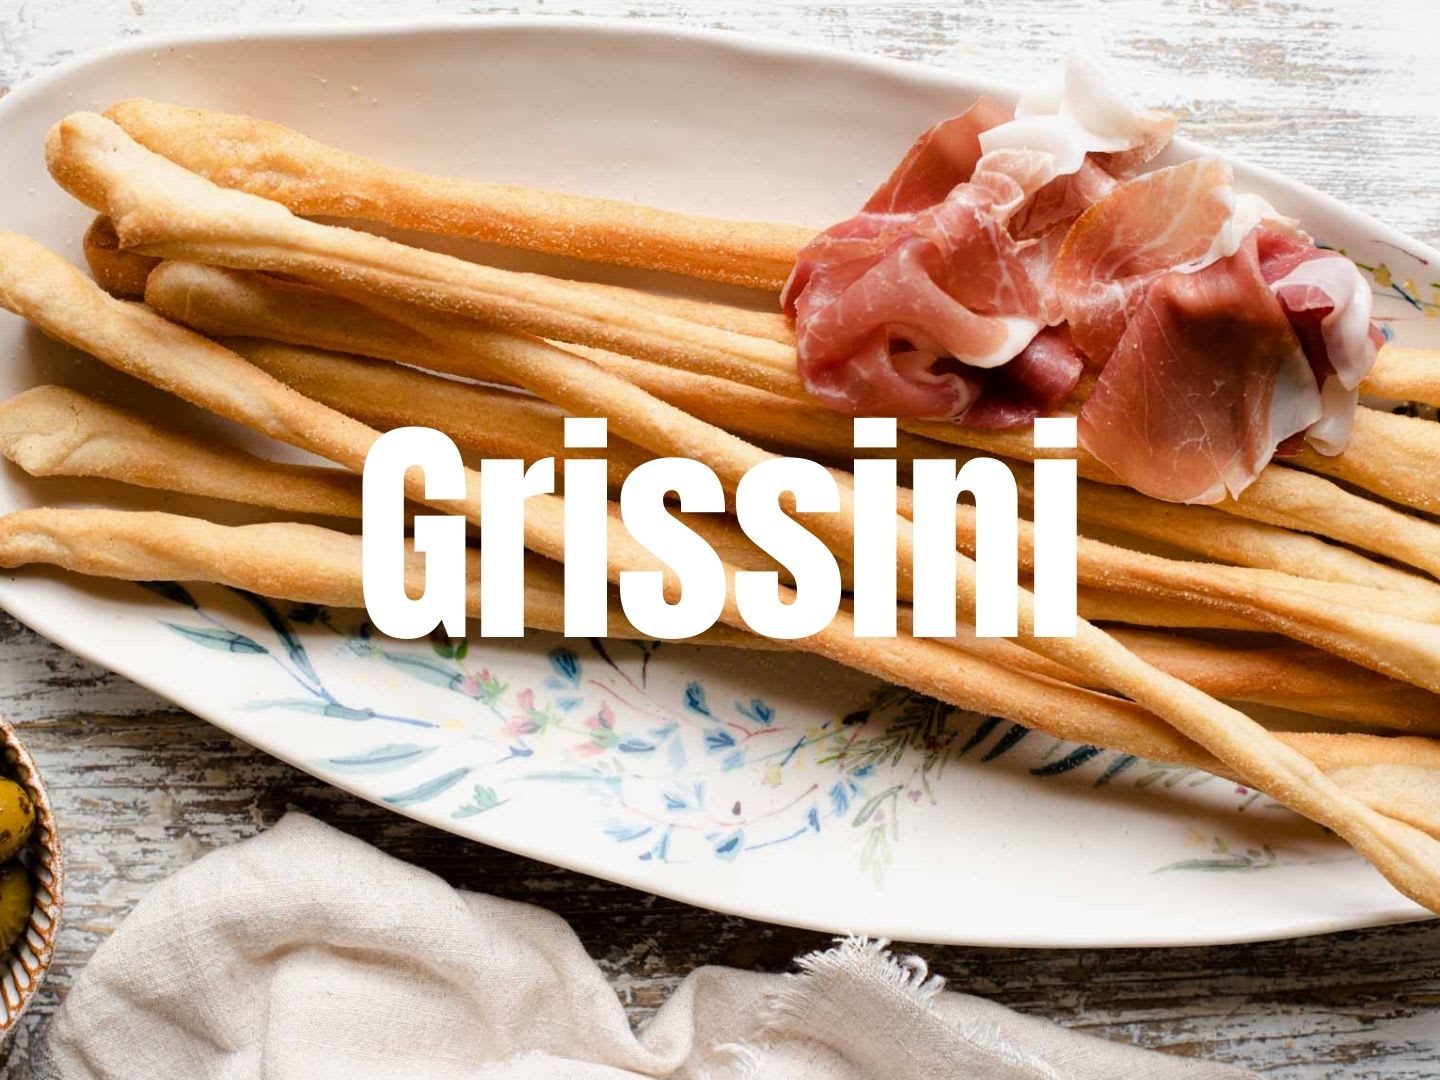 Breadsticks - Italian Kitchen Inside The Rustic - Grissini